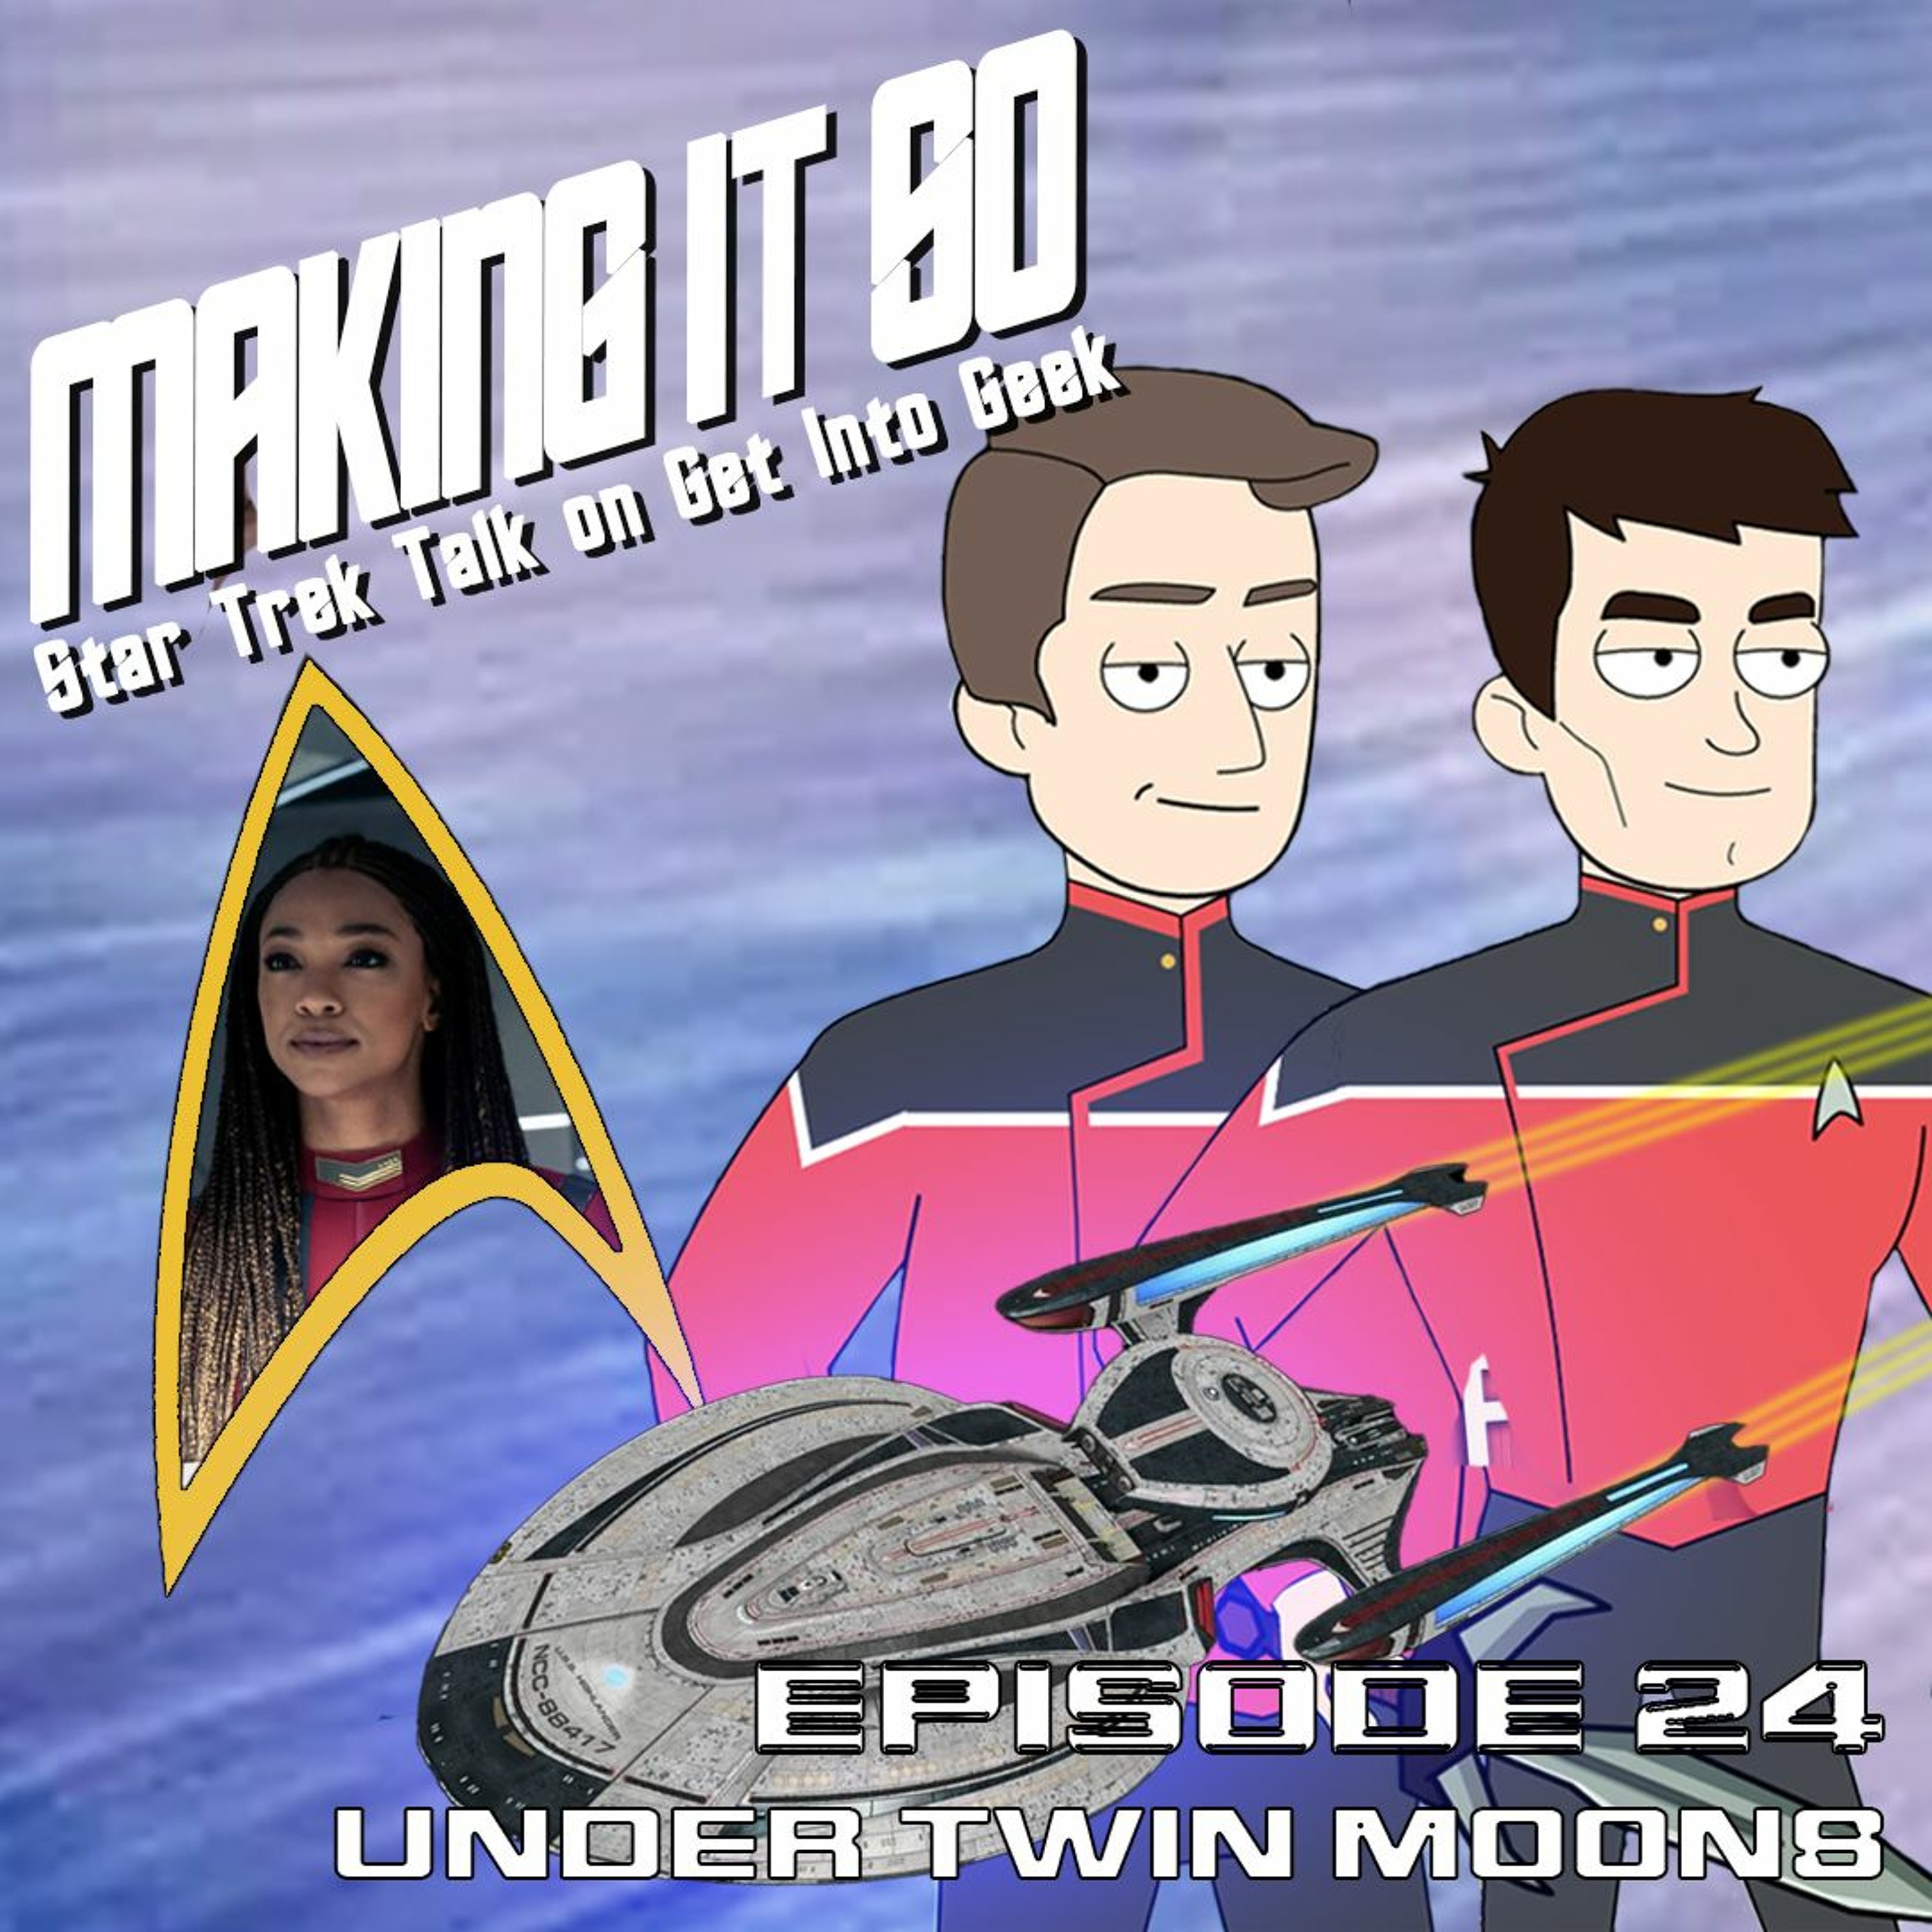 Under Twin Moons (Making It So - Star Trek Talk Episode 24)